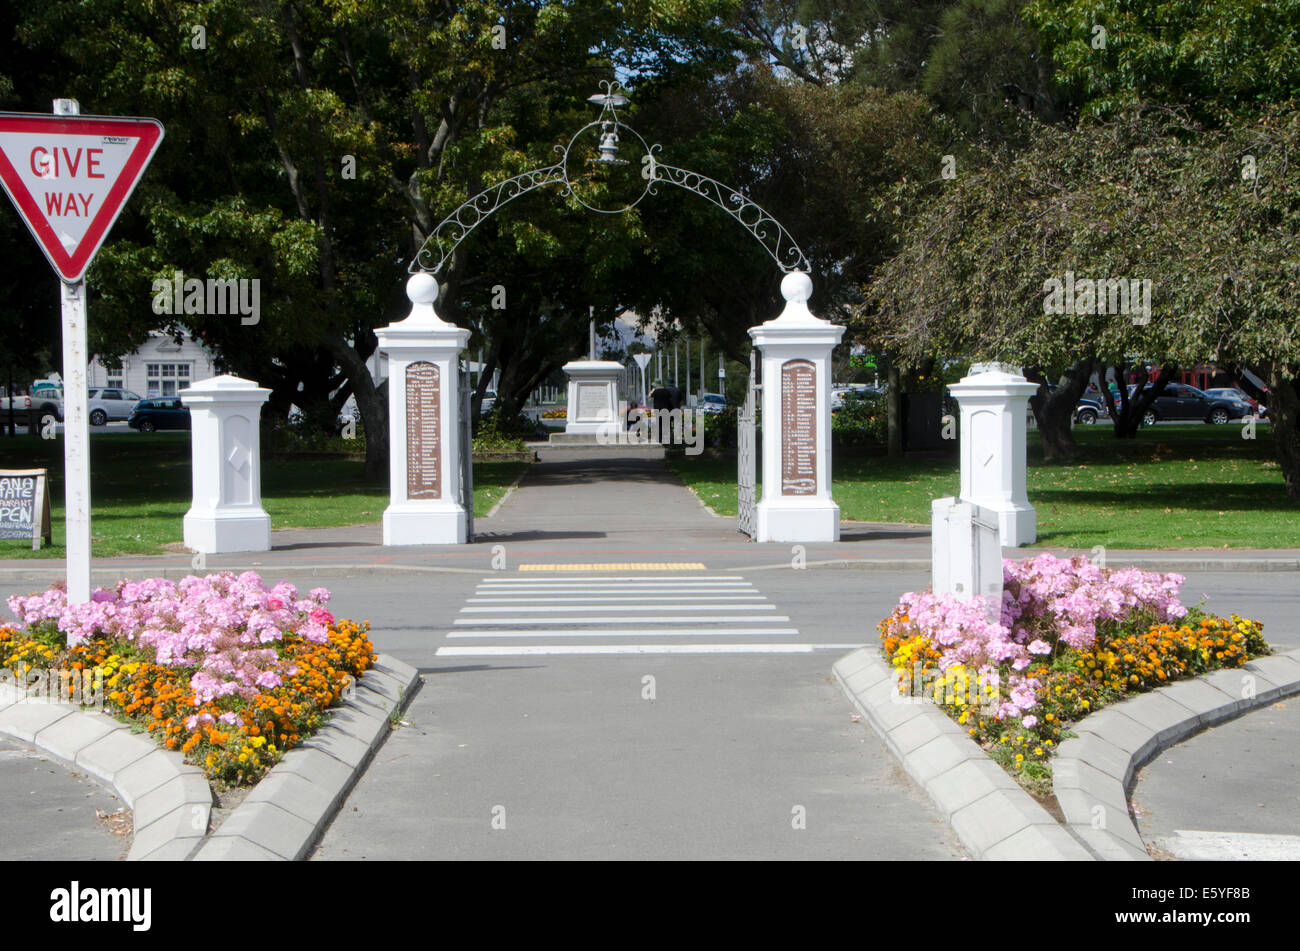 War memorial gates and flowers in traffic islands, Martinborough, Wairarapa, North Island, New Zealand Stock Photo